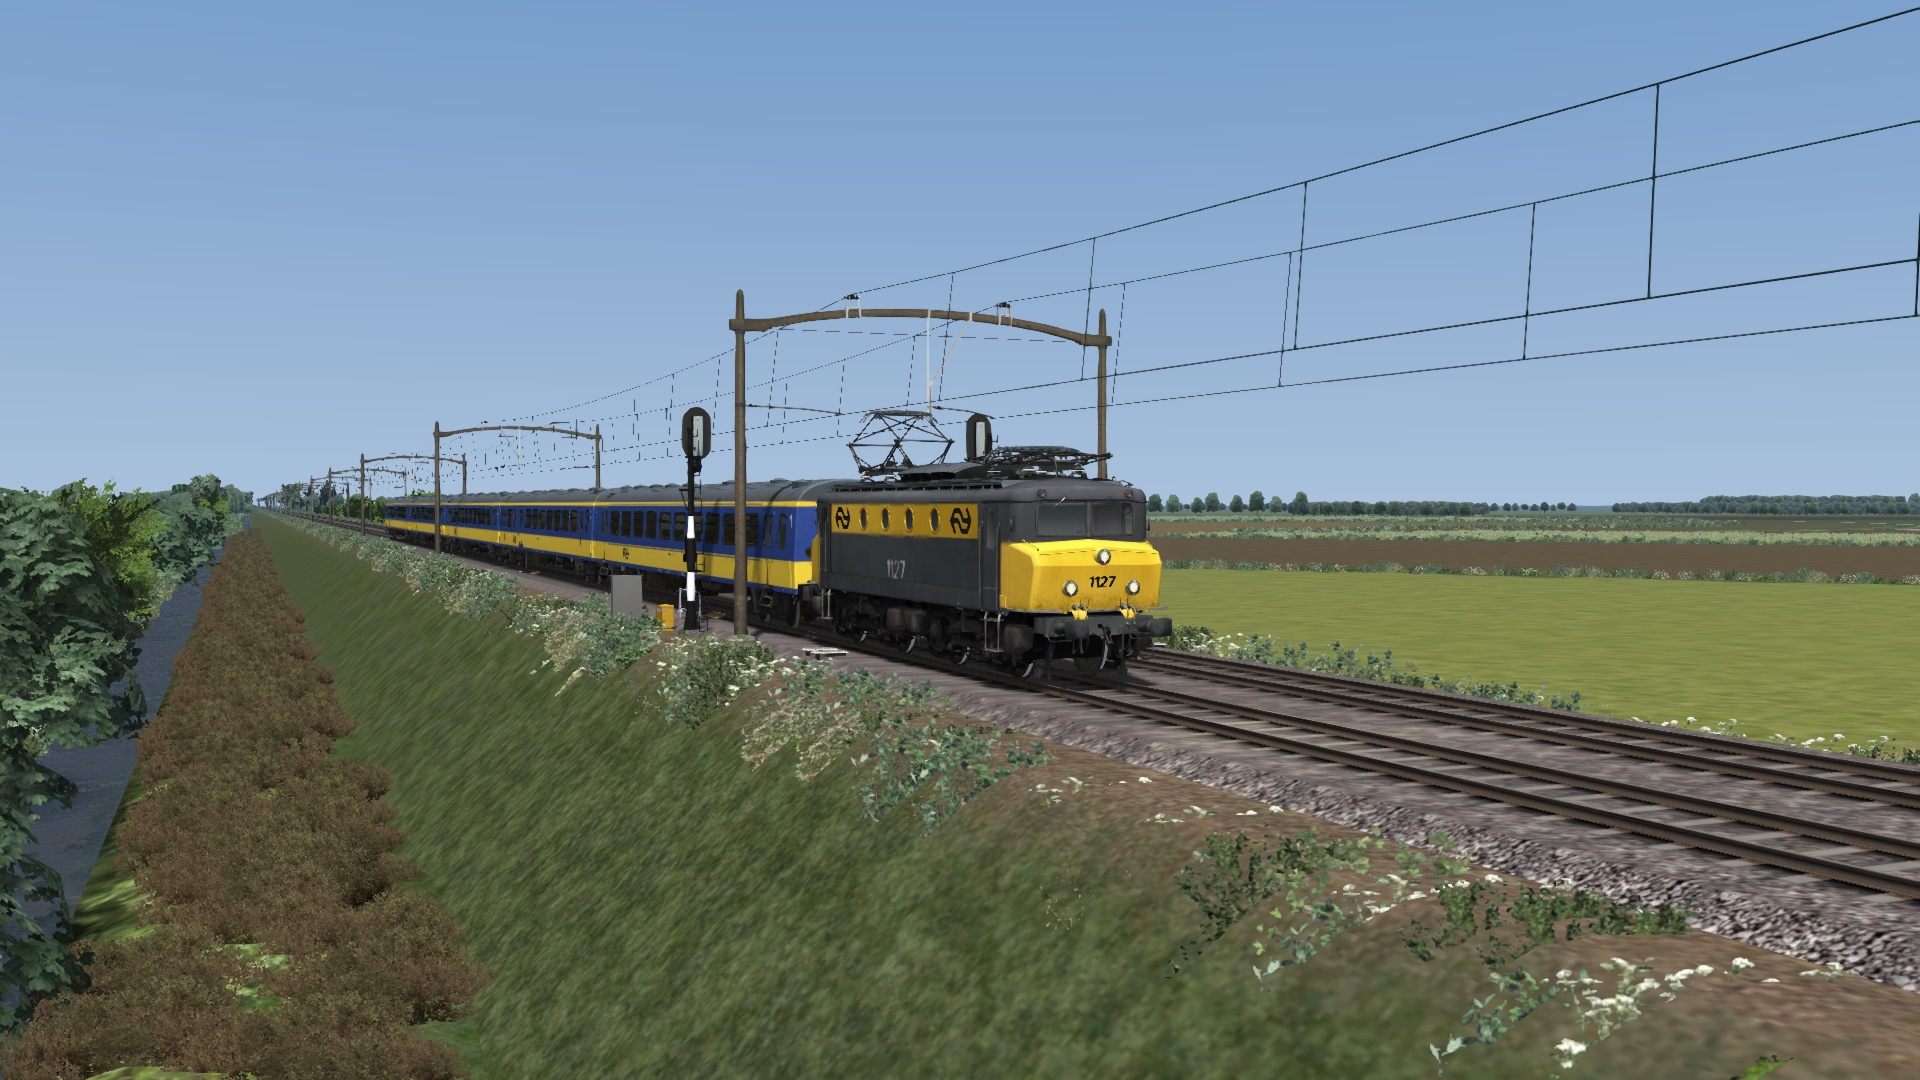 More information about "[1986 - NS] Trein 1953 Den Haag CS - Venlo"